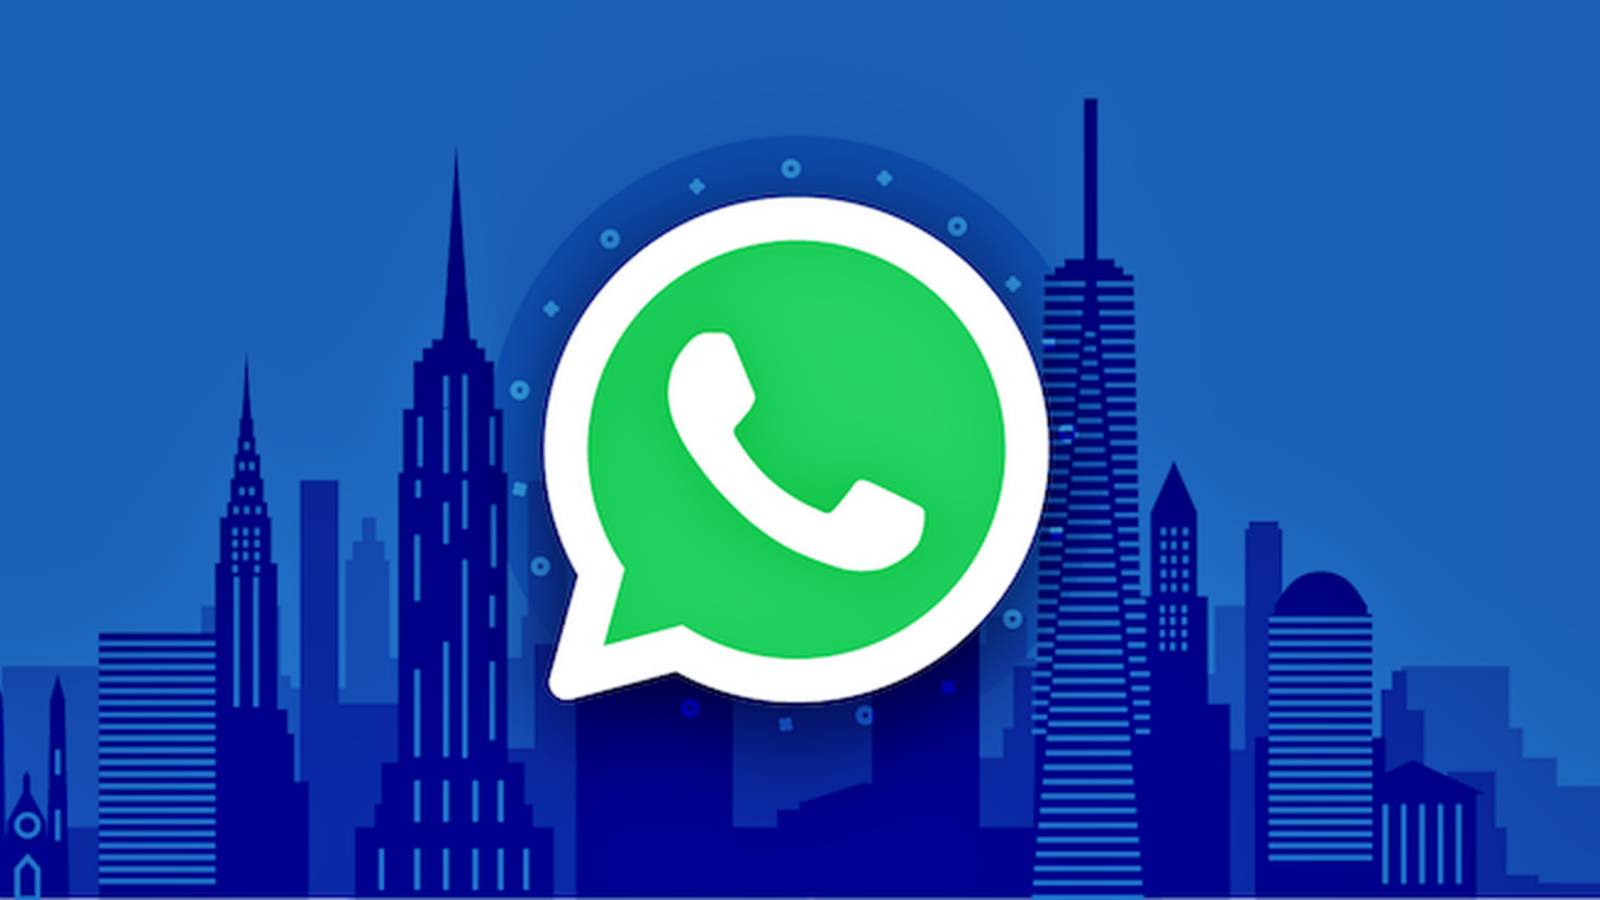 WhatsApp sincronizare